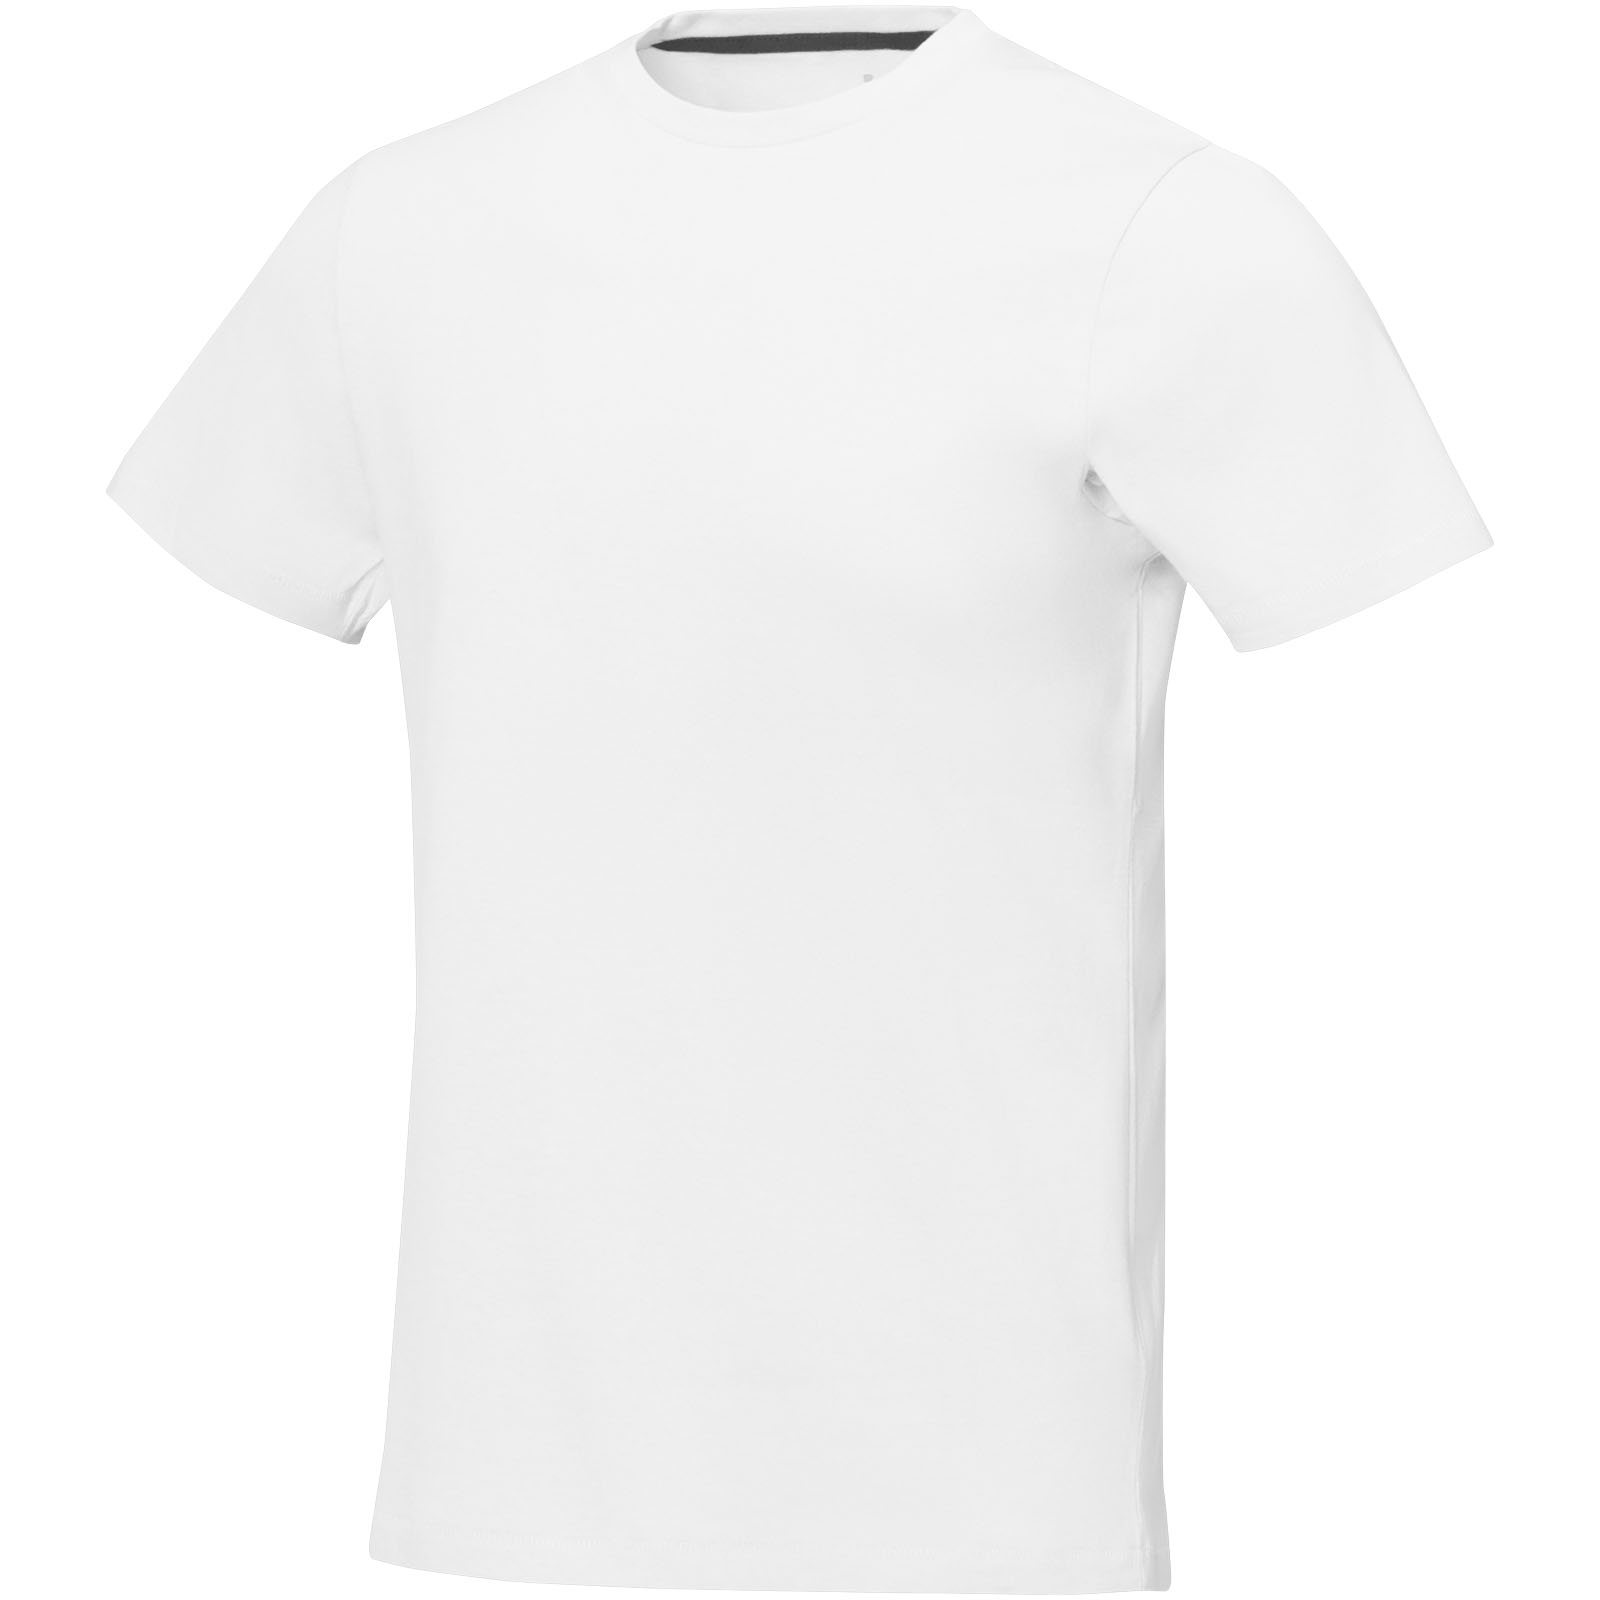 Clothing - Nanaimo short sleeve men's t-shirt